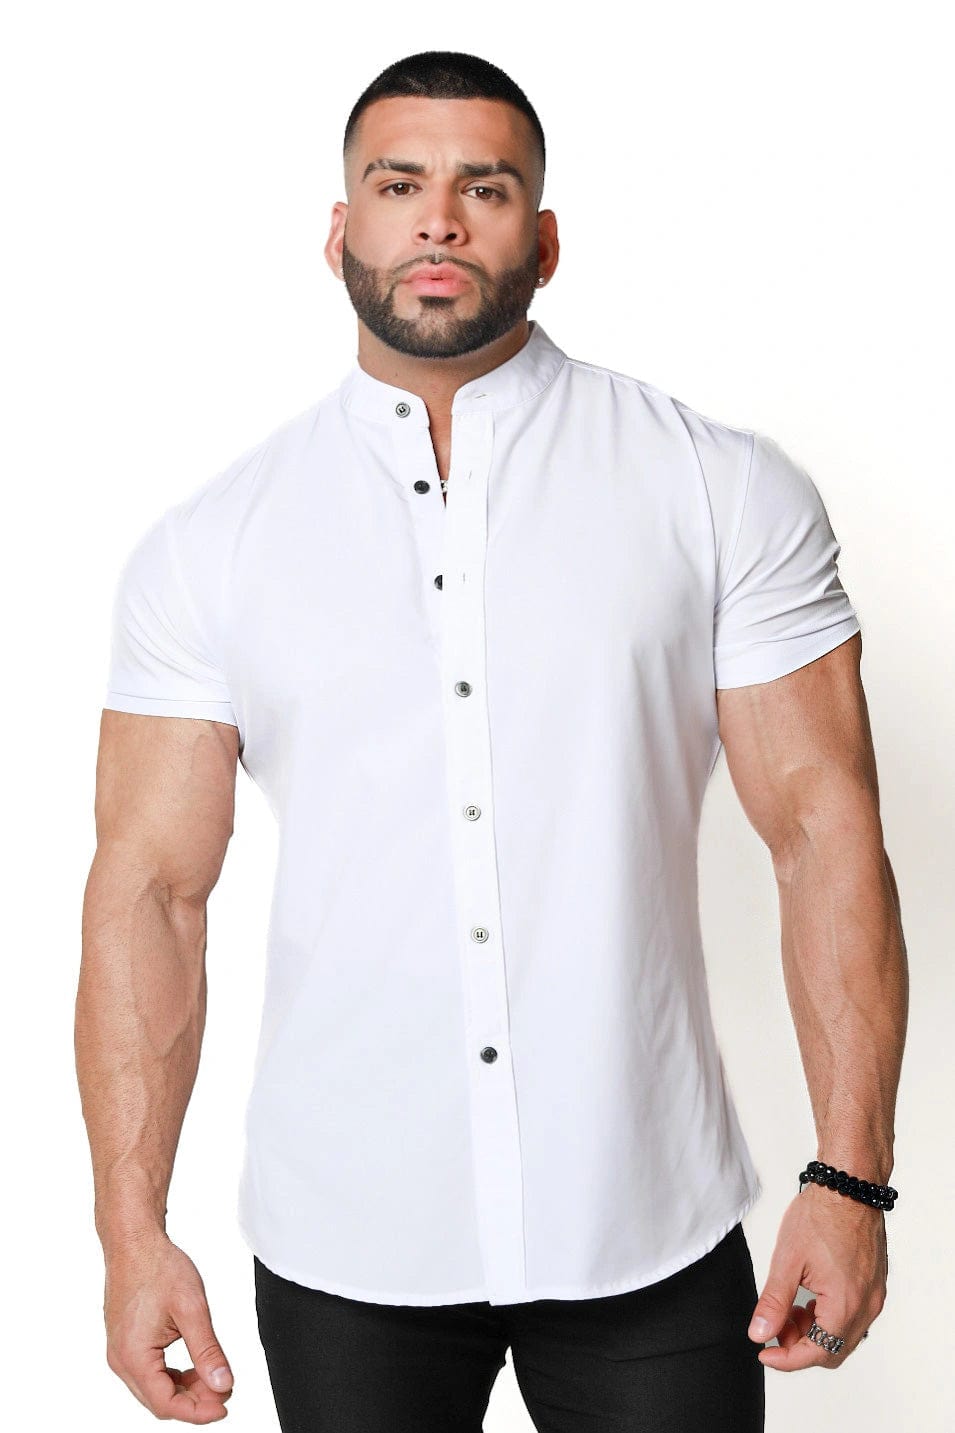 Dress Shirts for Men, Shop Men's Dress Shirts